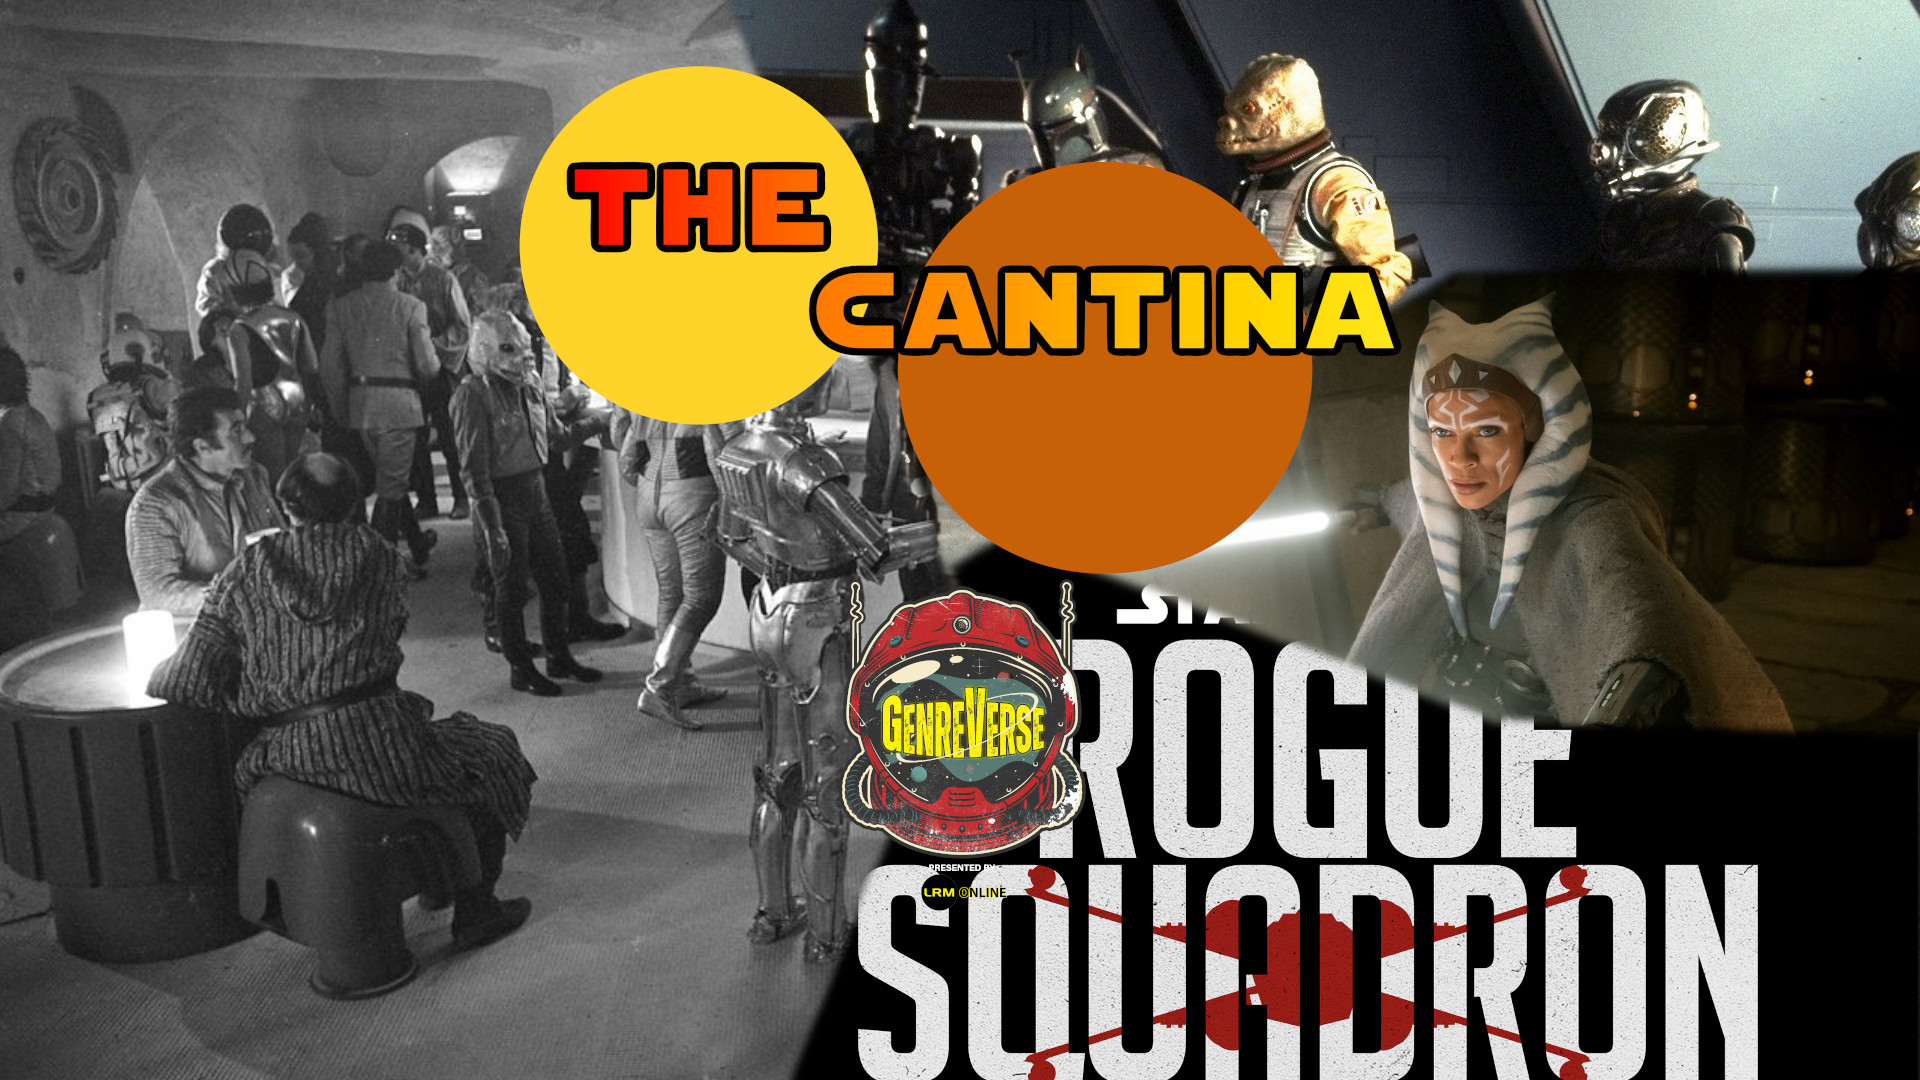 Kenobi Bounty Hunter Rumors, Christopher Lloyd In Ahsoka, Mike Stackpole Rogue Squadron Involvement The Cantina Star Wars News And Rumors